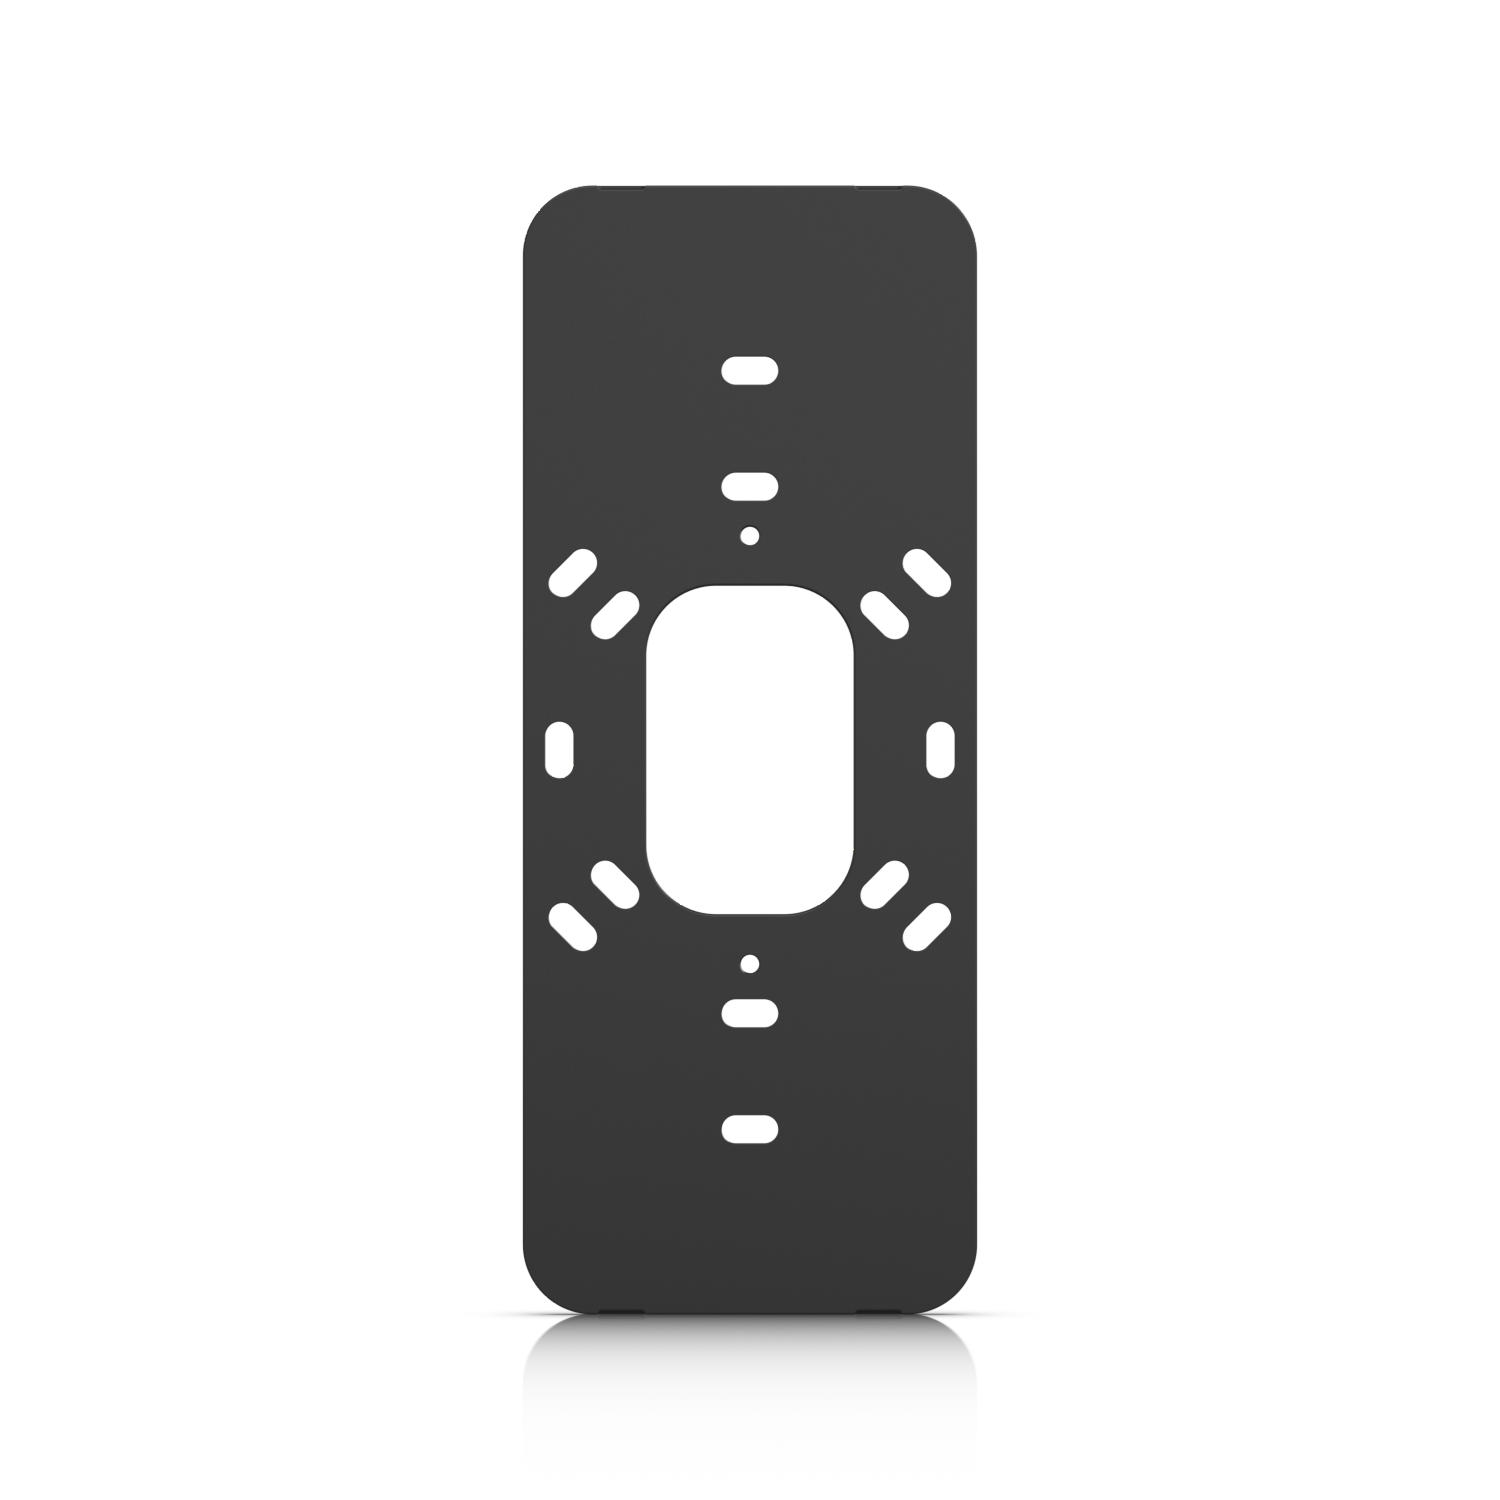 Ubiquiti G4 Doorbell Pro PoE Gang Box Mount